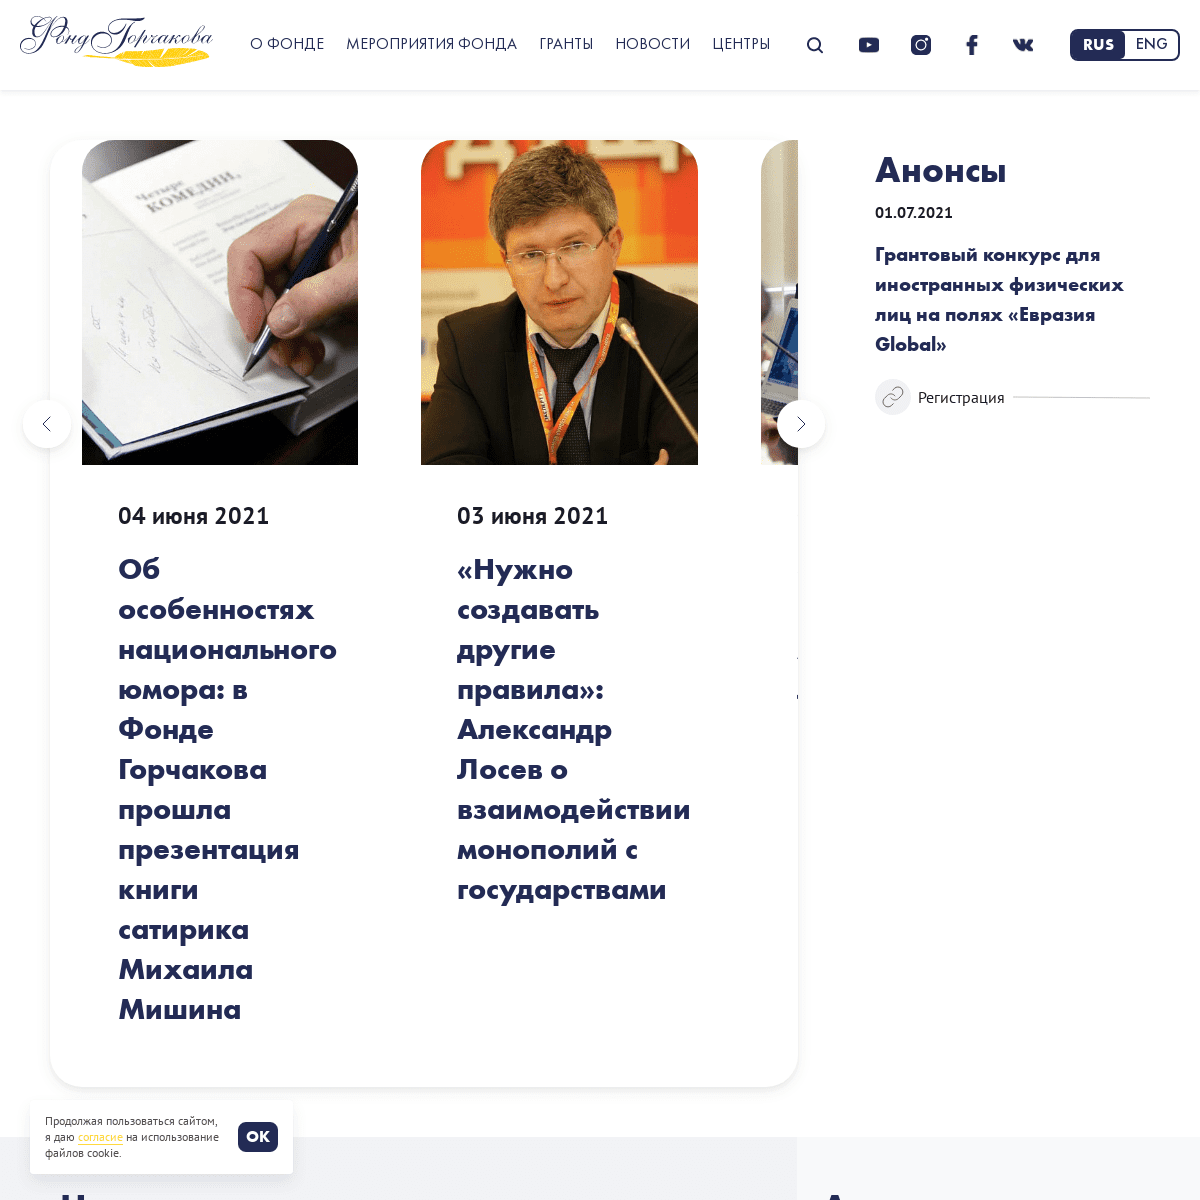 A complete backup of https://gorchakovfund.ru